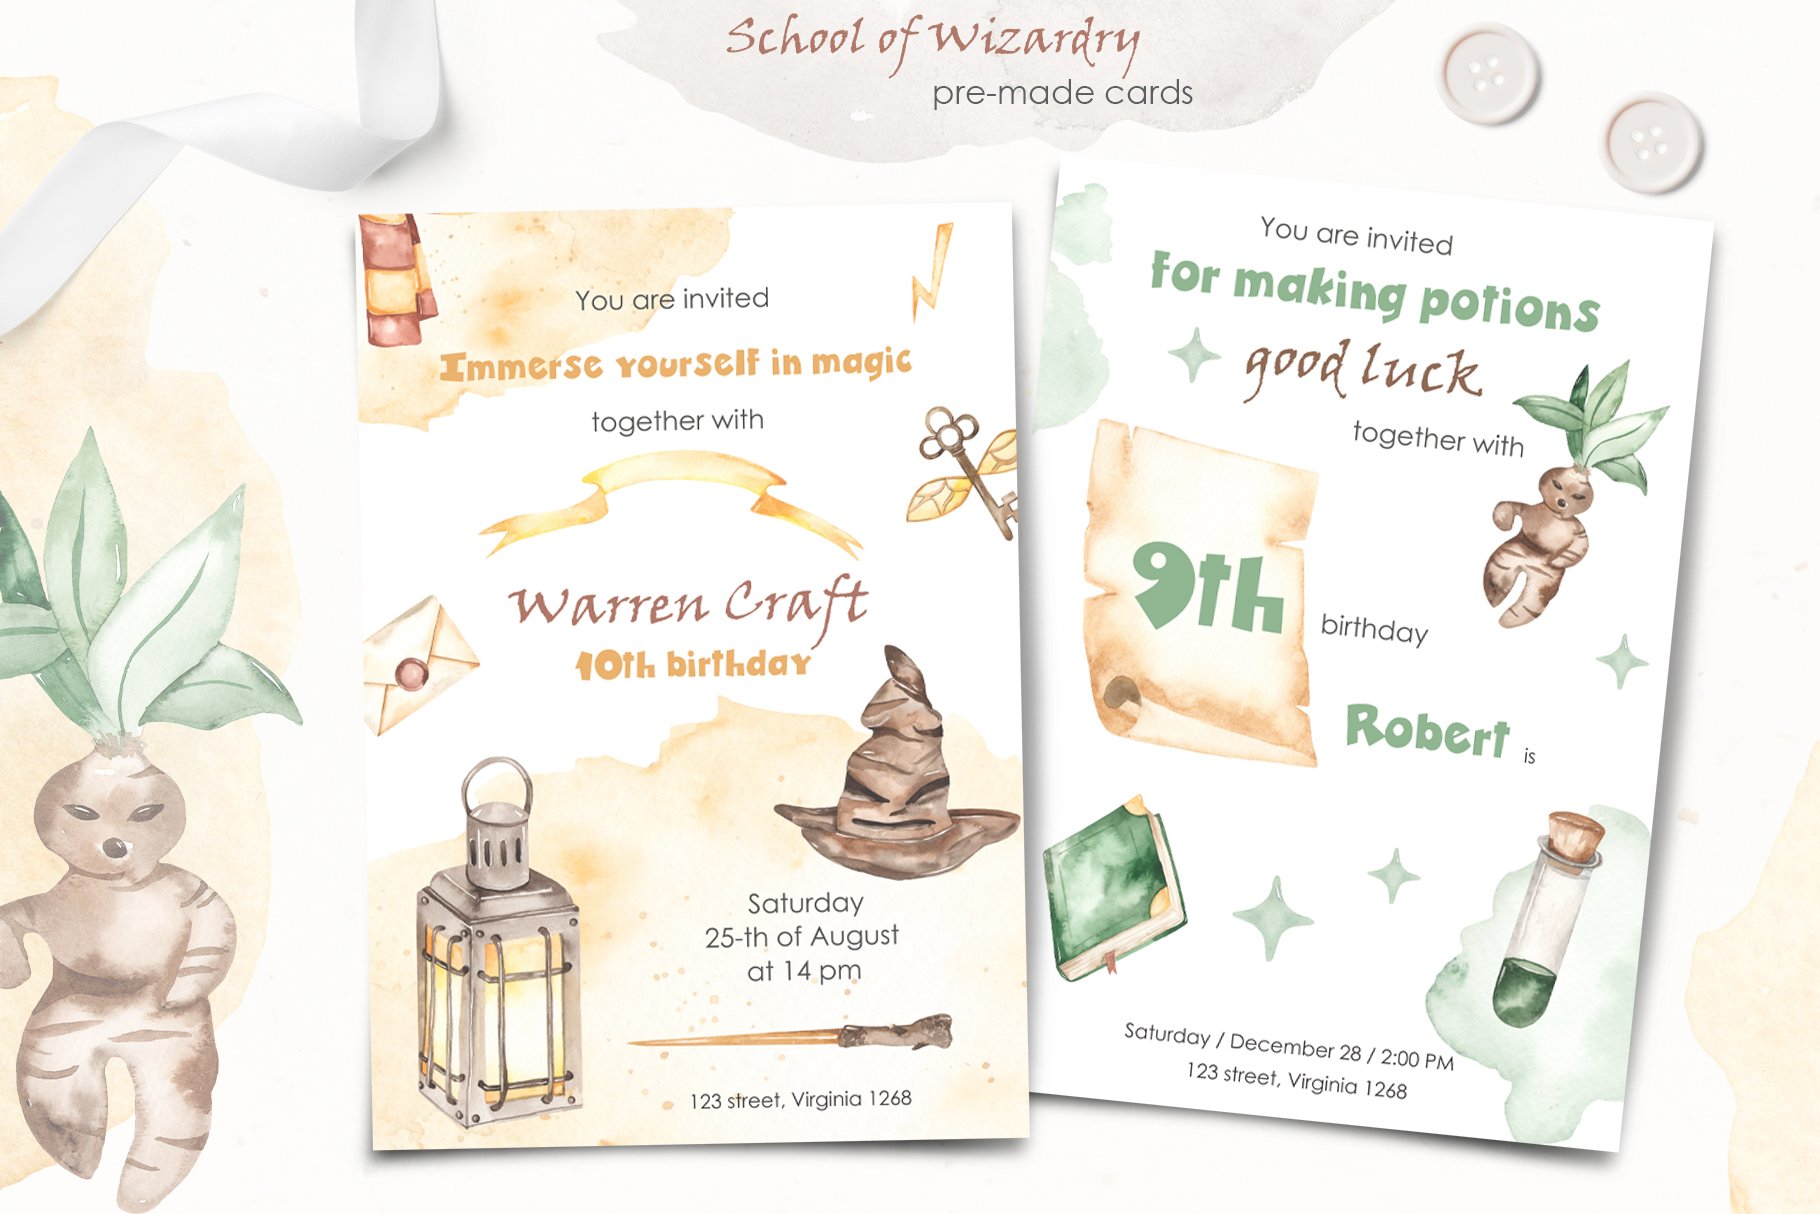 School Of Wizardry Watercolor pre-made cards preview.